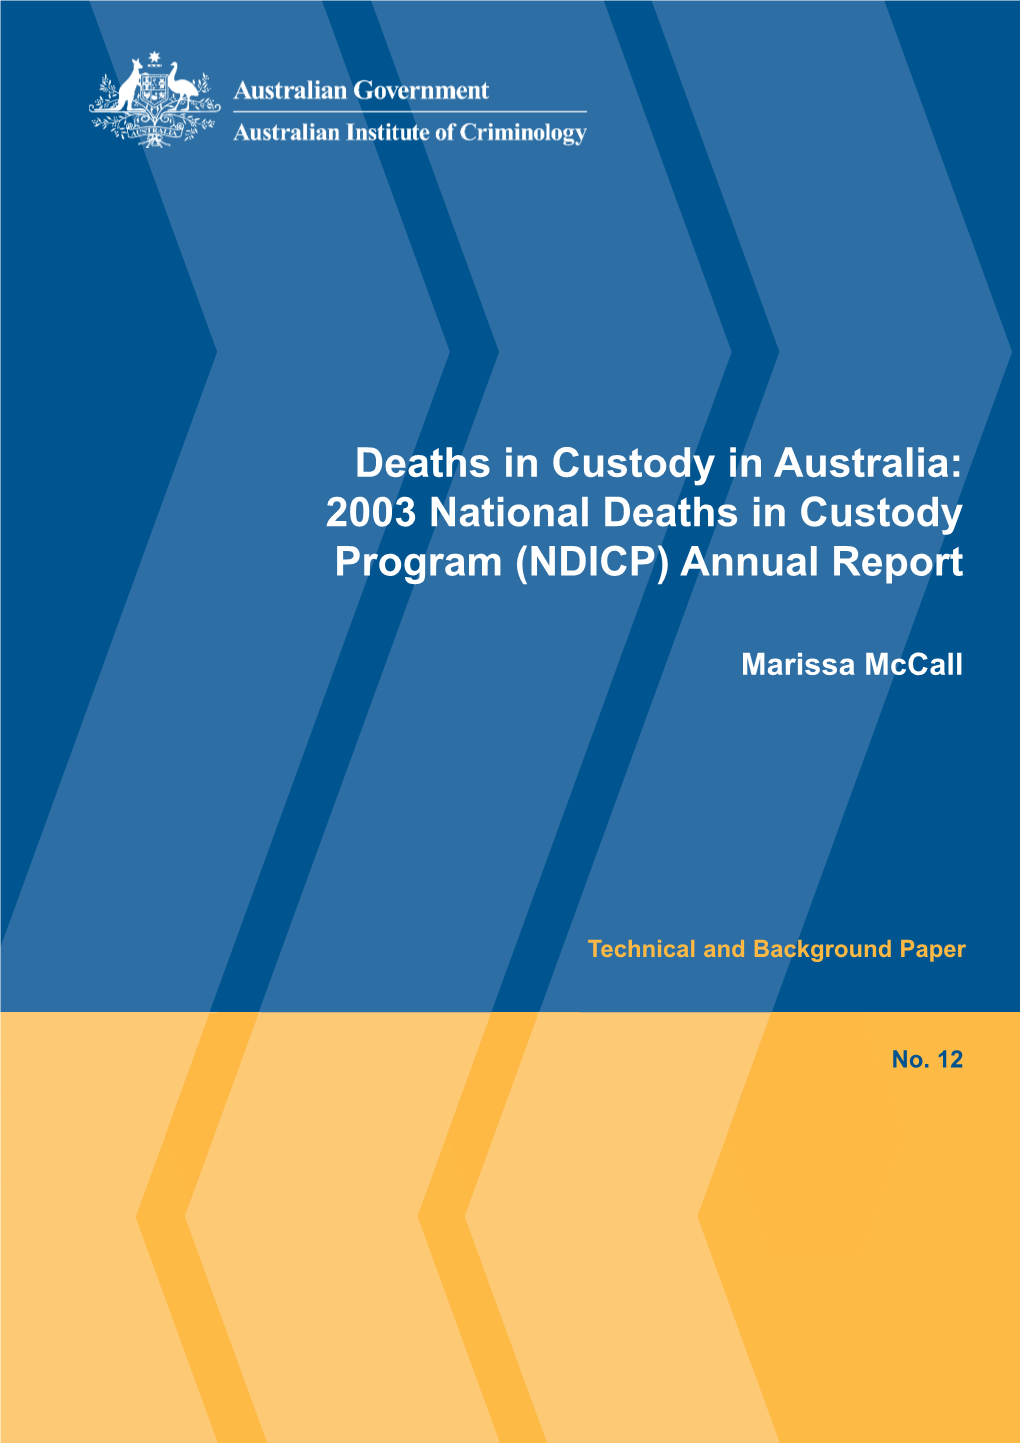 2003 National Deaths in Custody Program (NDICP) Annual Report